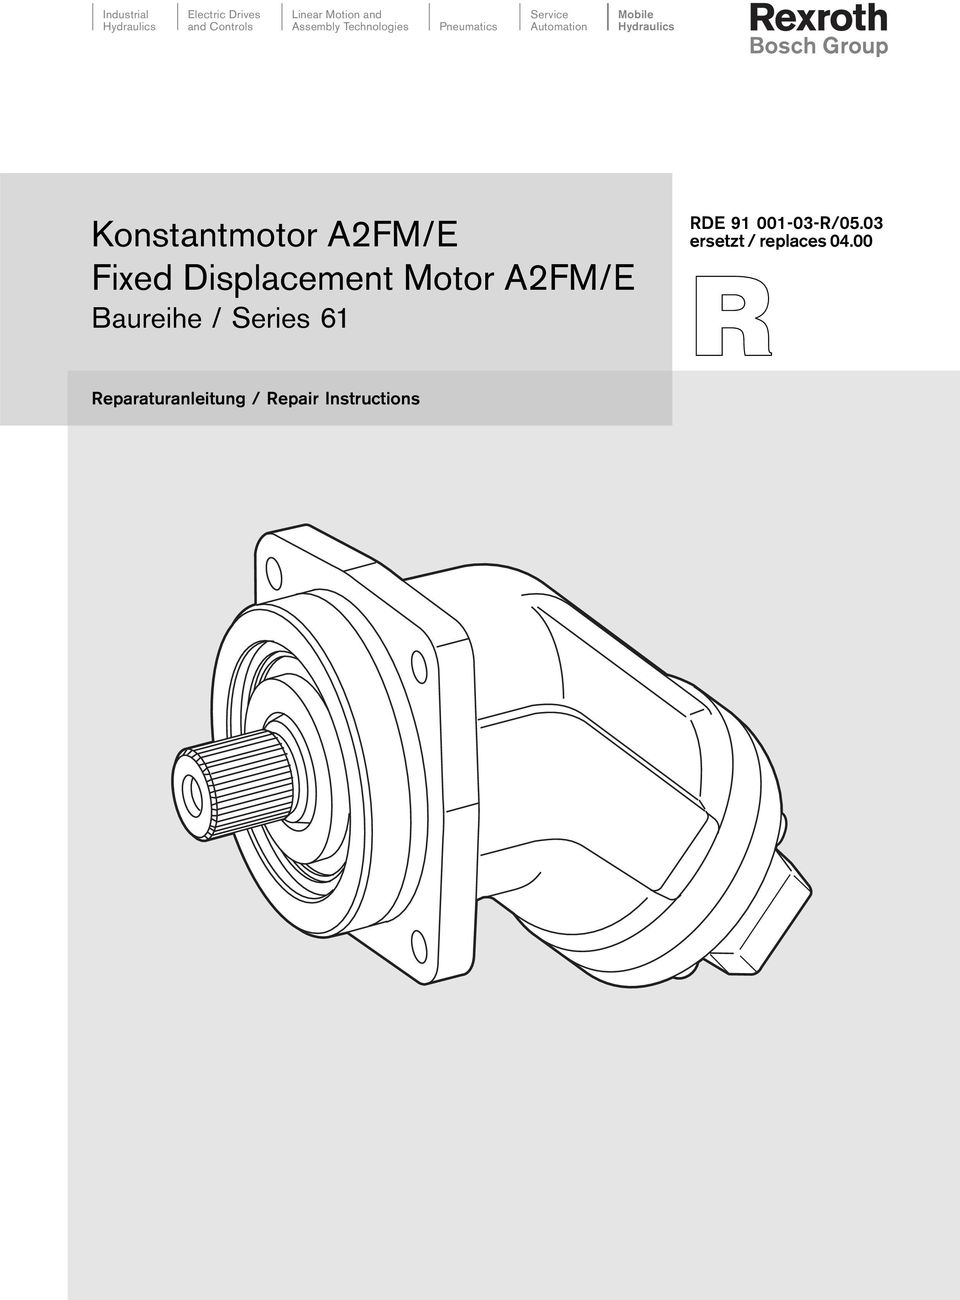 Konstantmotor A2FM/E Fixed Displacement Motor A2FM/E Baureihe / Series 61